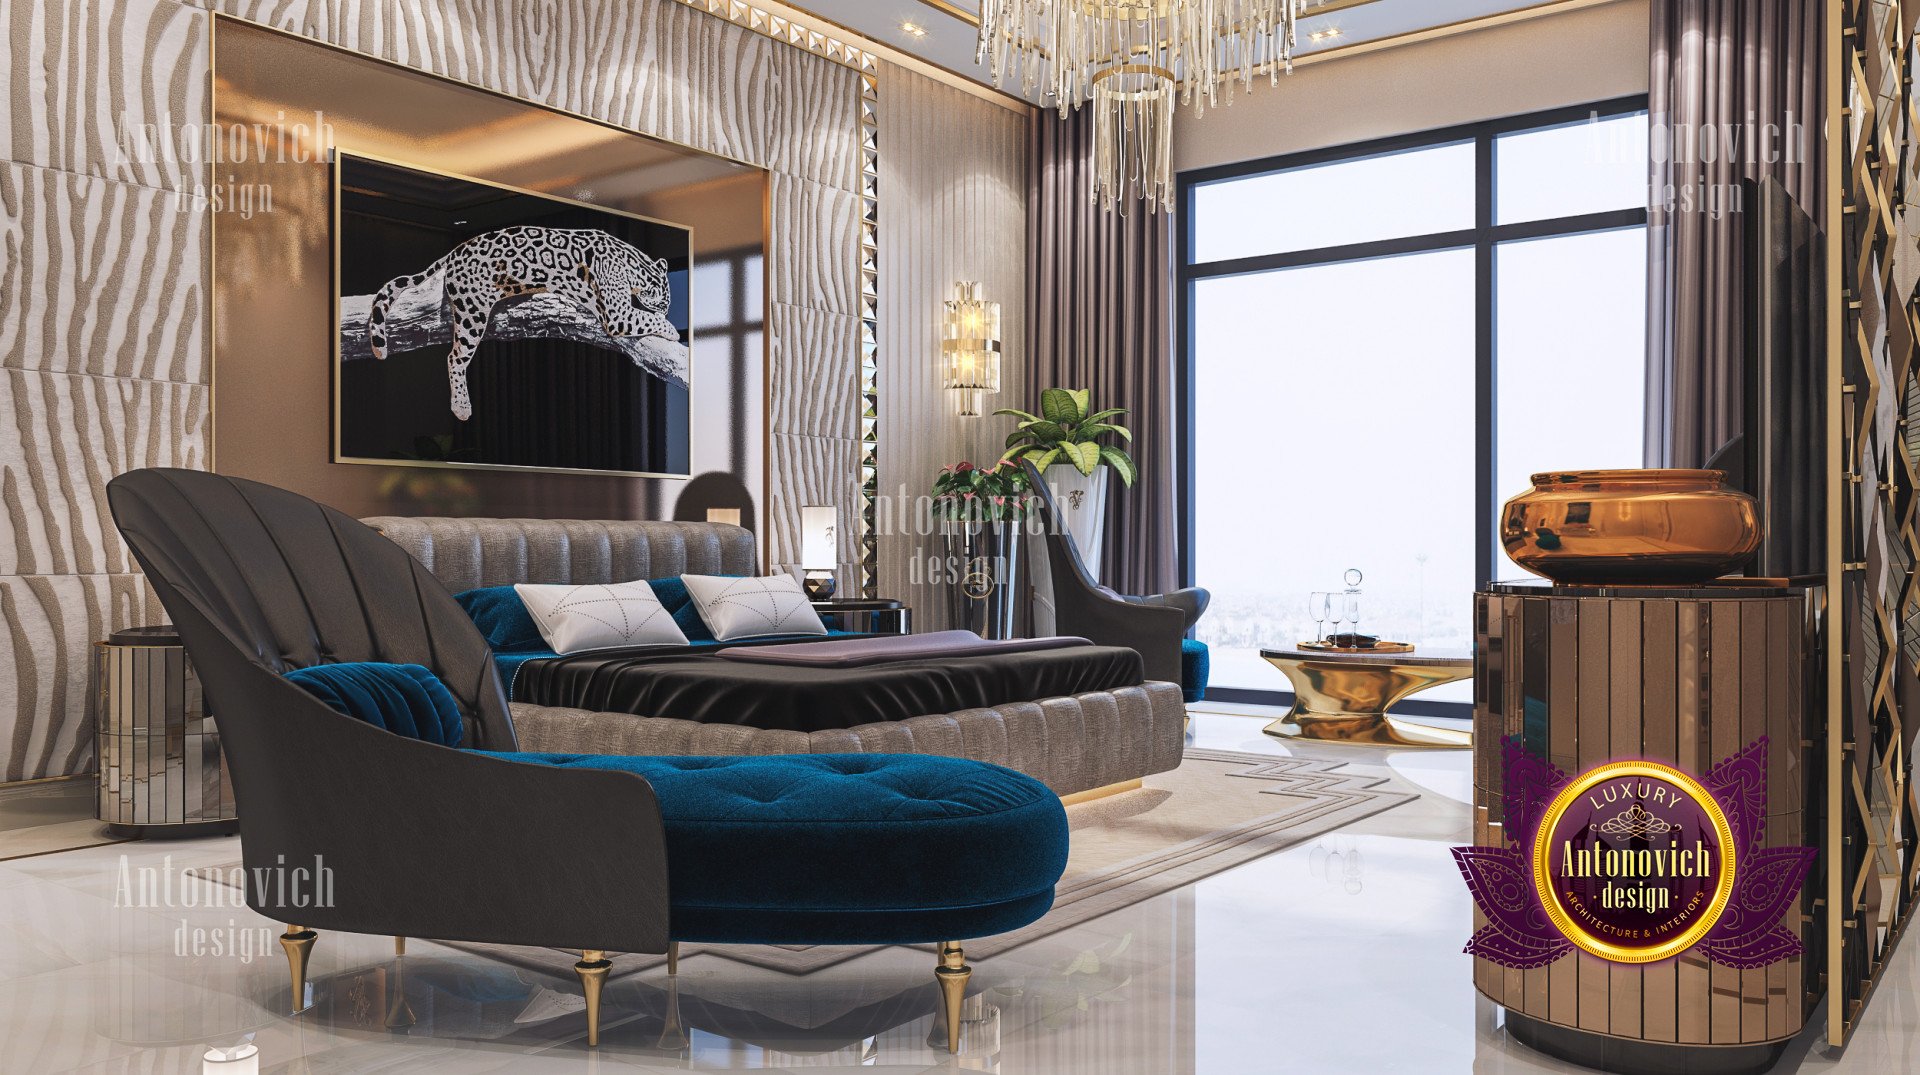 Unique bedroom decor luxury interior design company in